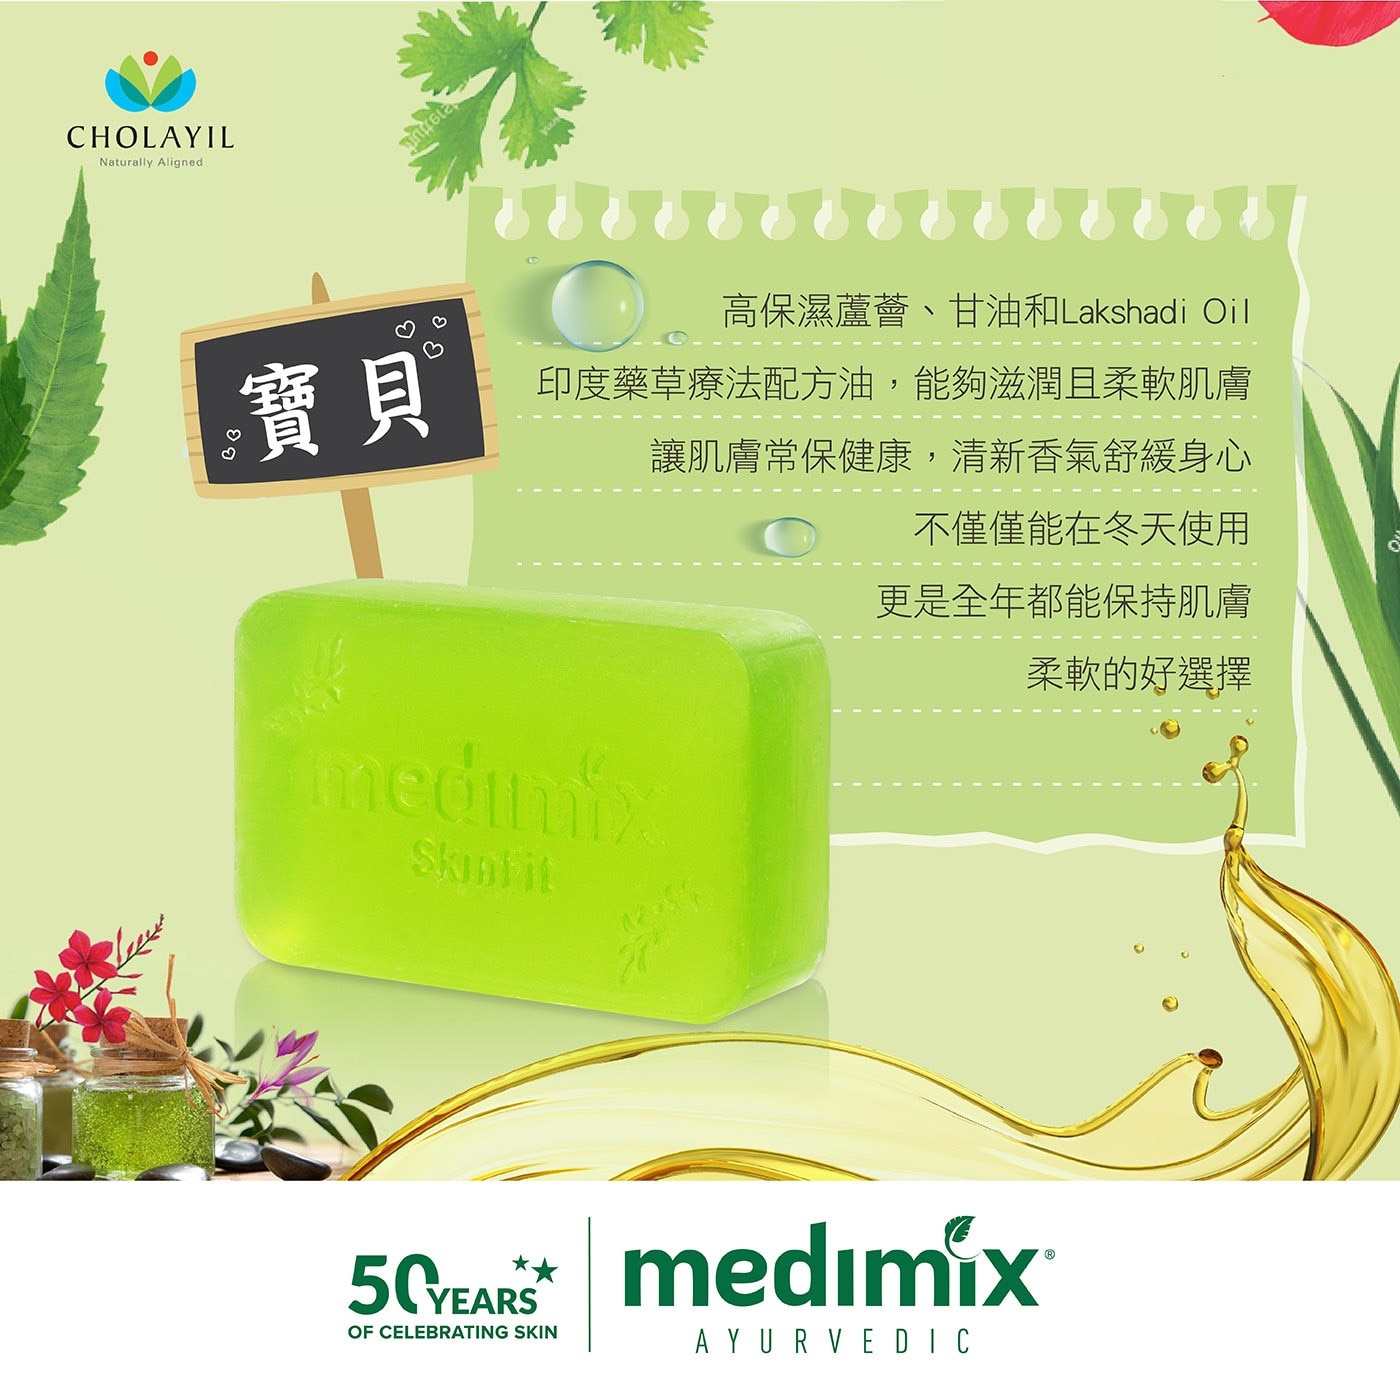 Medimix 印度綠寶石皇室藥草浴美肌皂 包含保濕蘆薈 甘油 並使用印度要草療法配方油 滋潤肌膚